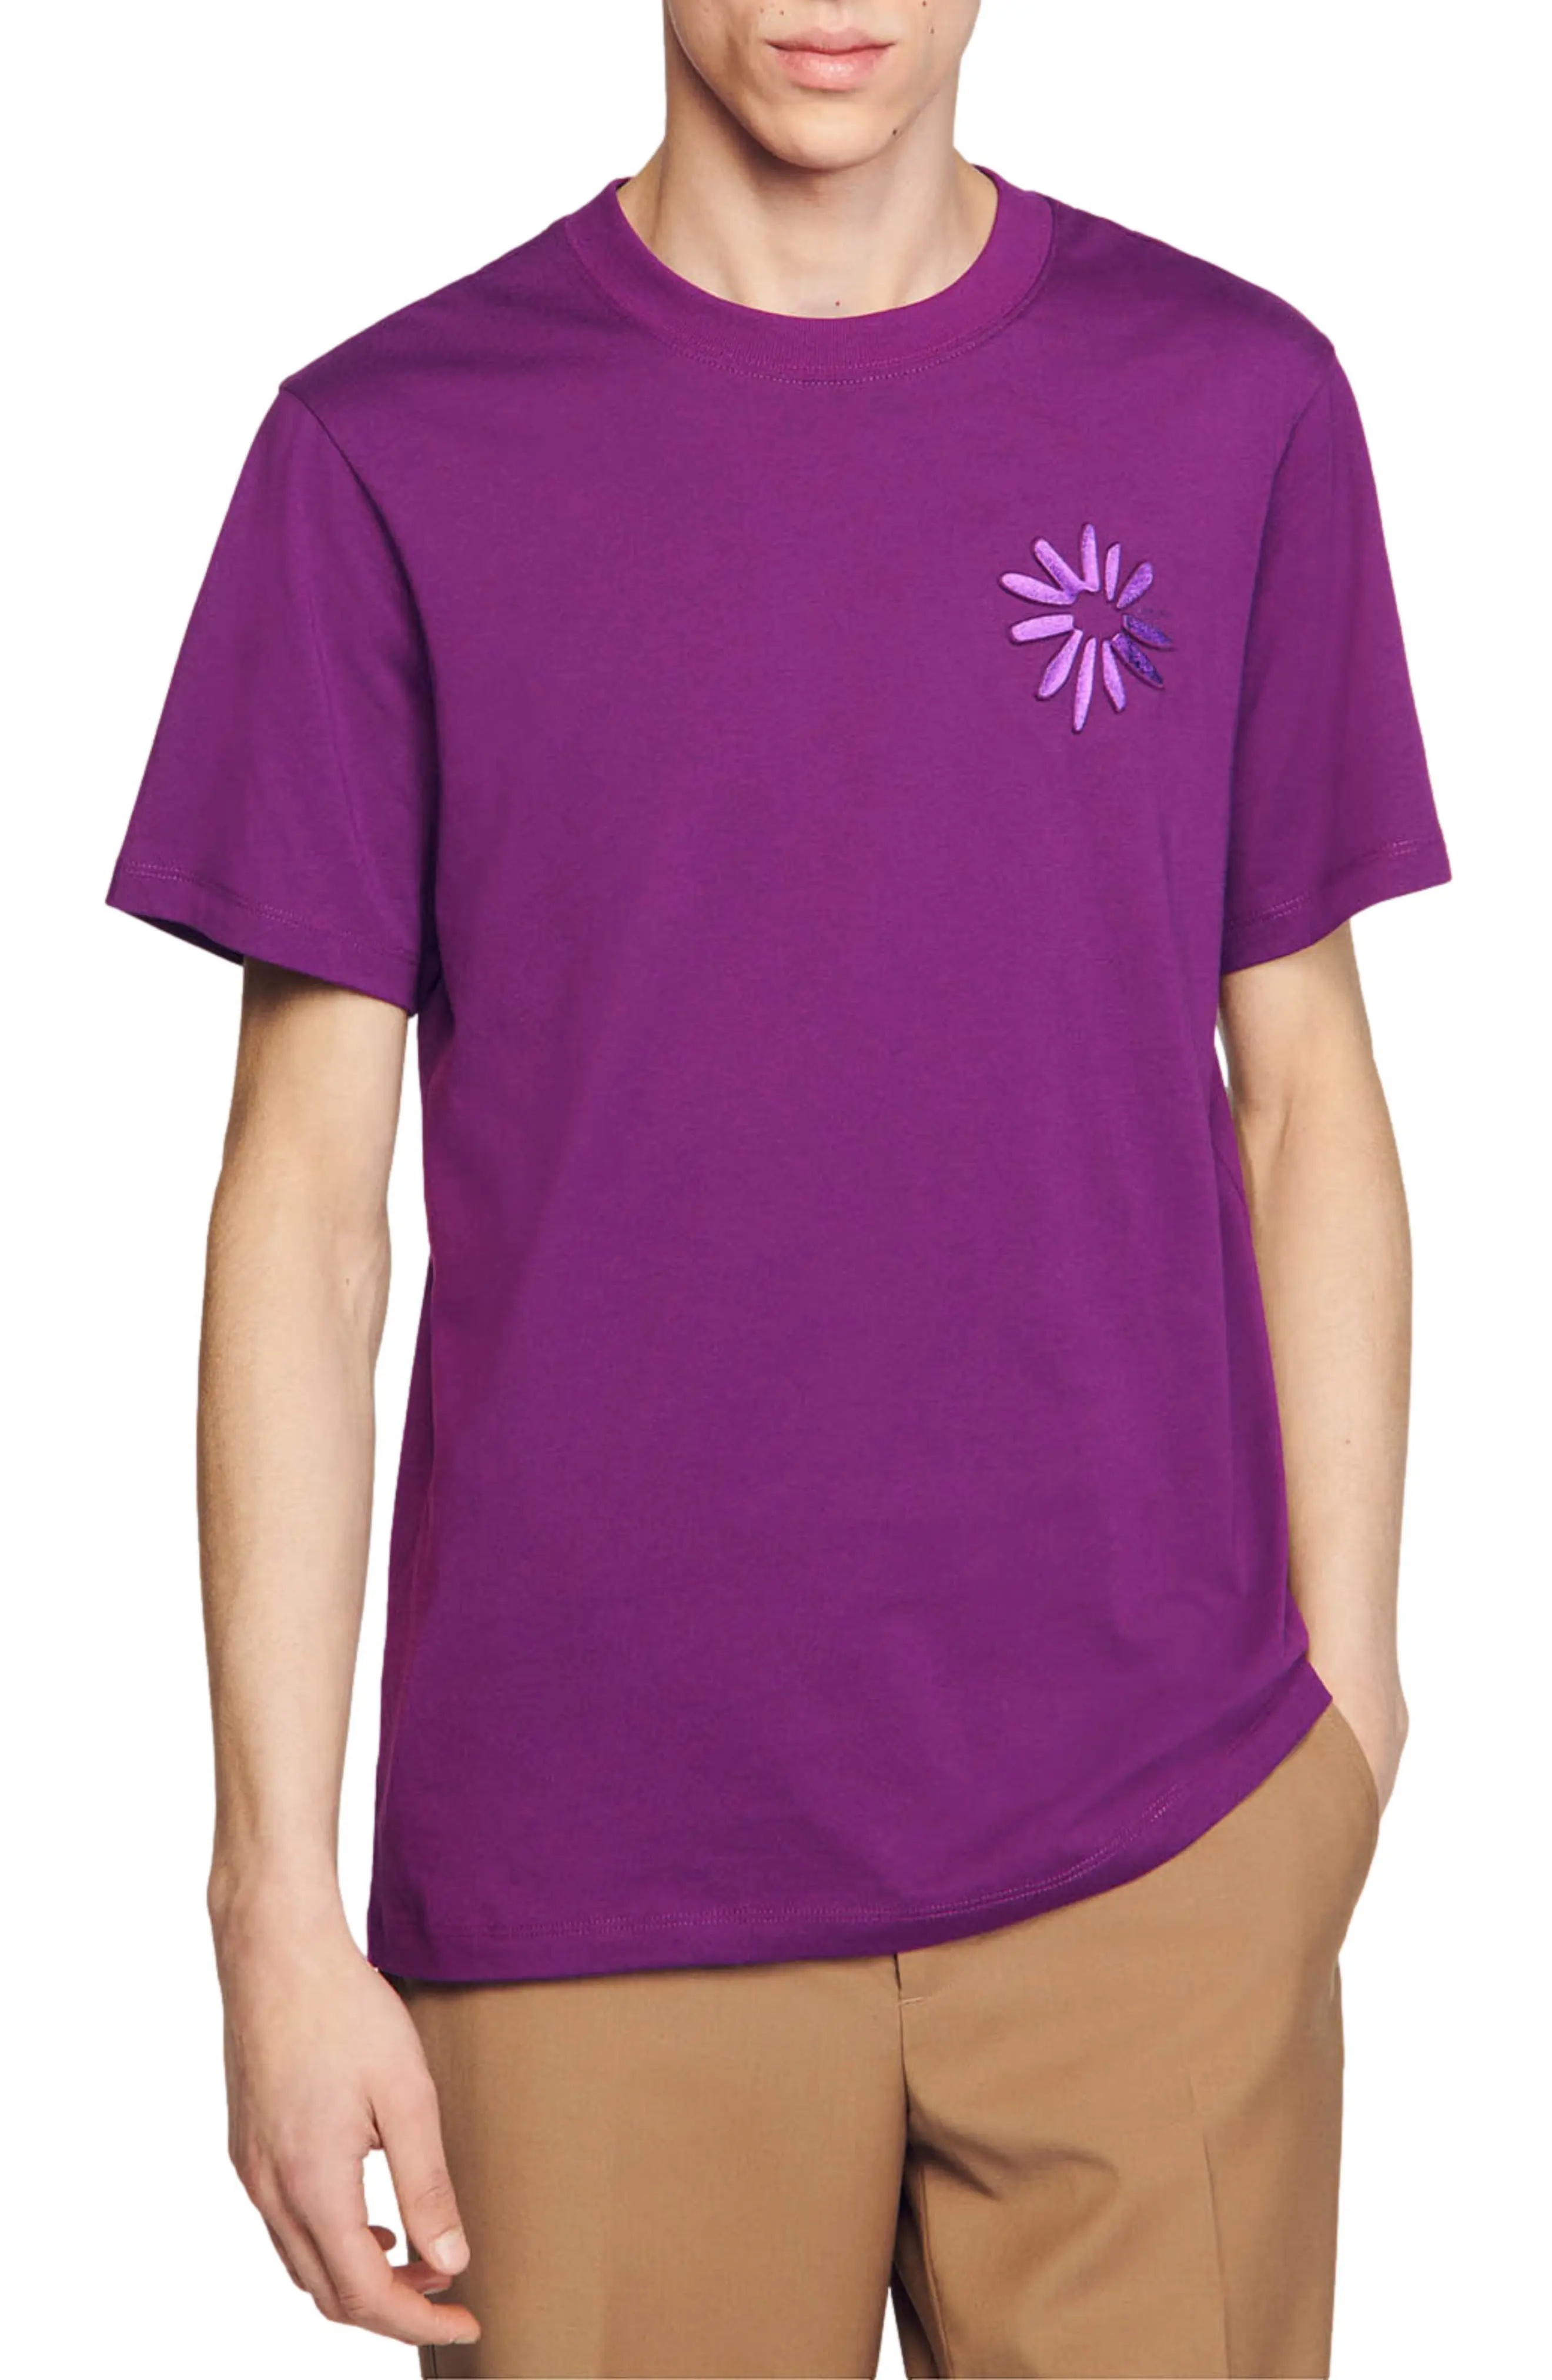 Glossy Flower Graphic T-Shirt - 1